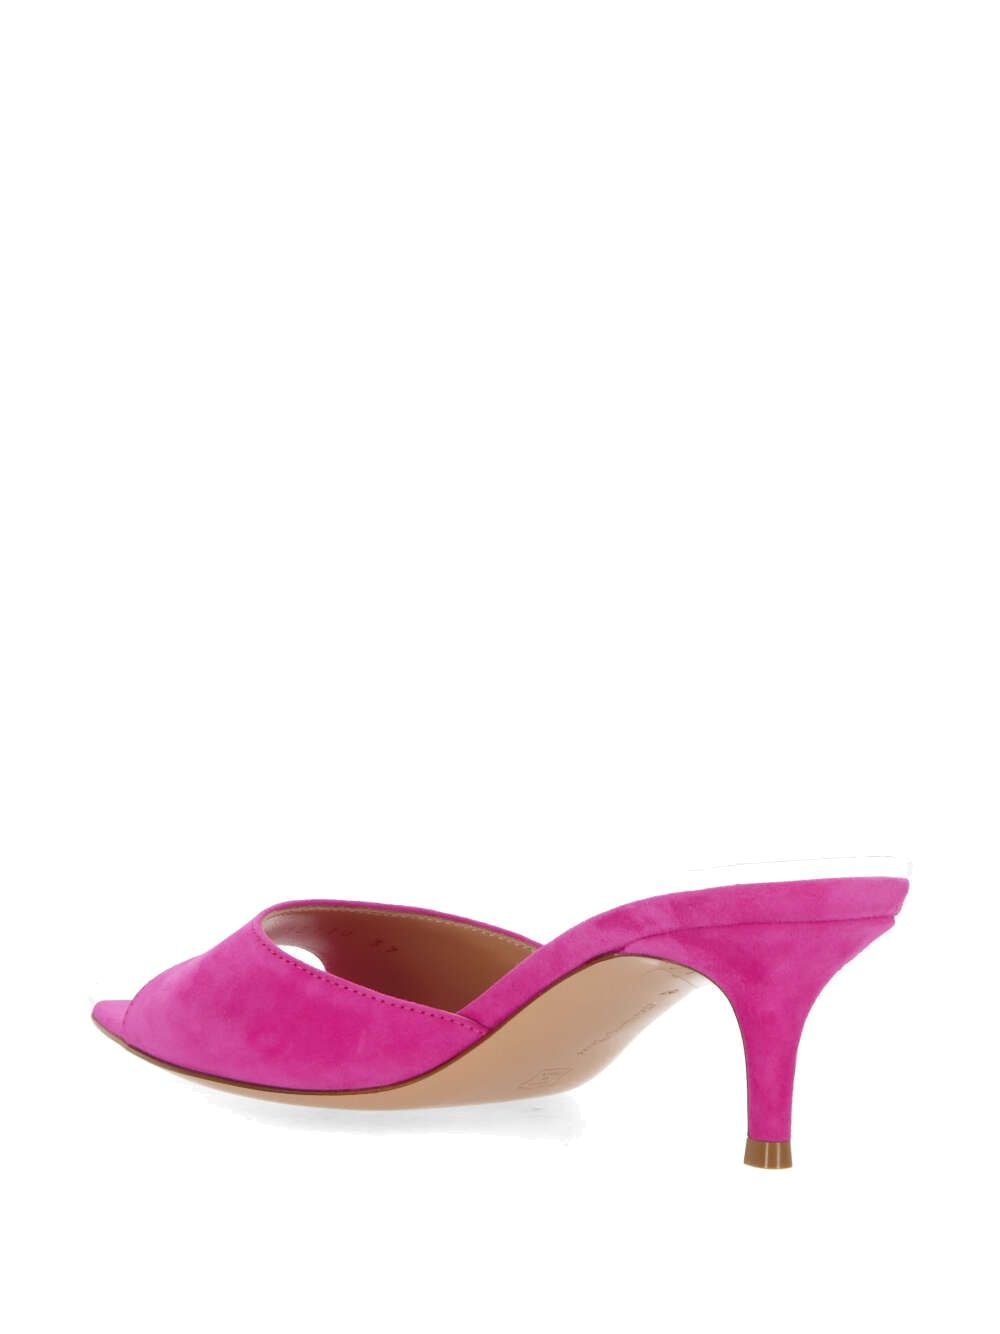 Fuchsia pink suede sandal